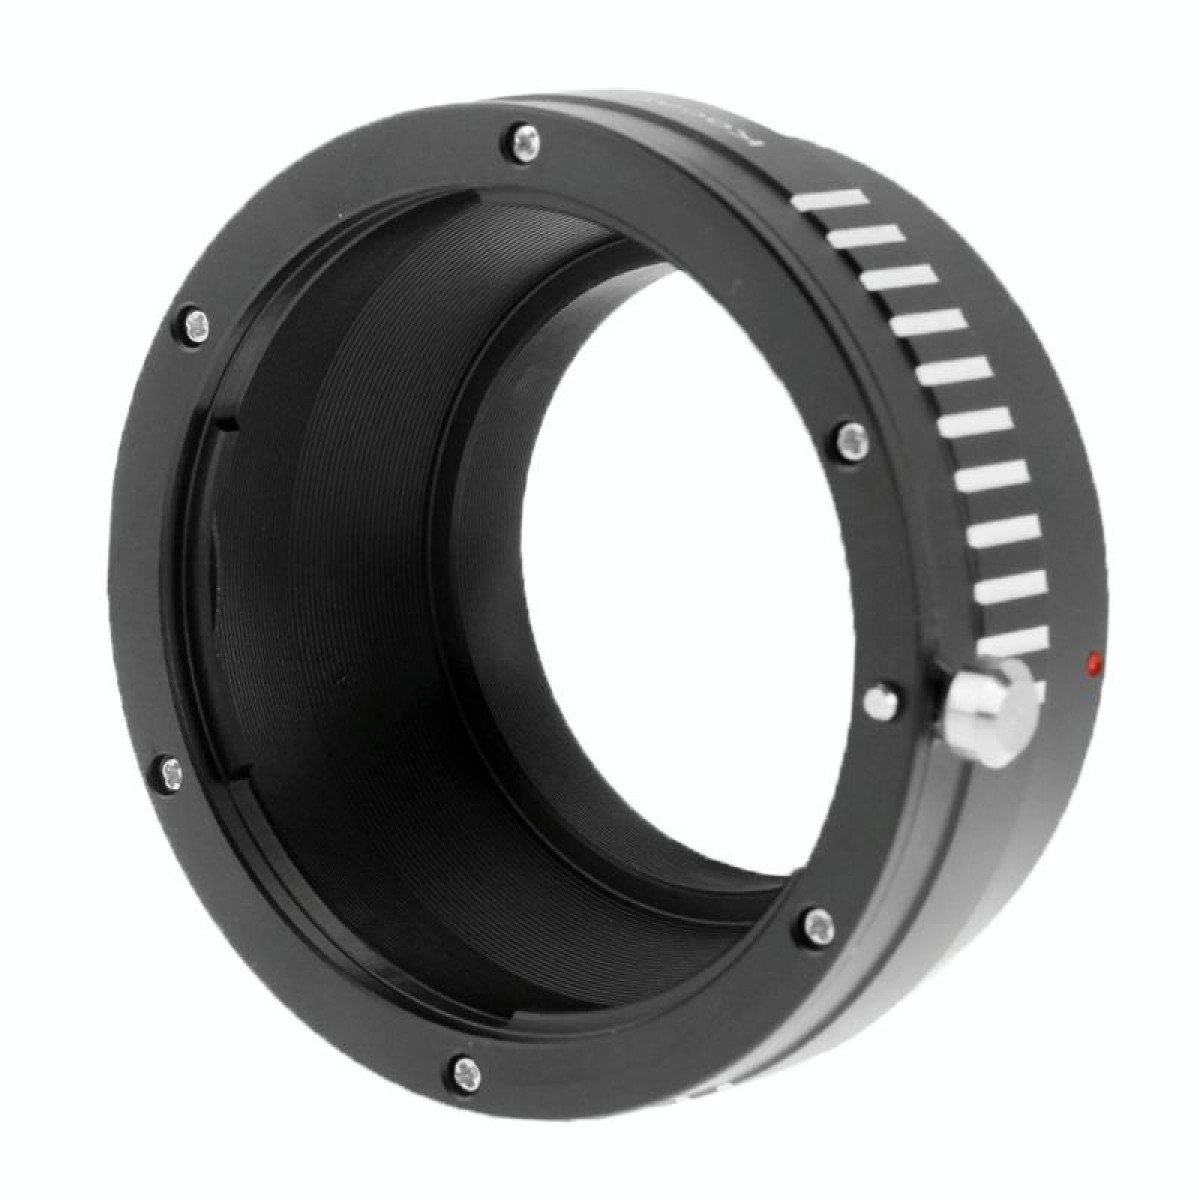 EOS Lens to NEX Lens Mount Stepping Ring(Black)